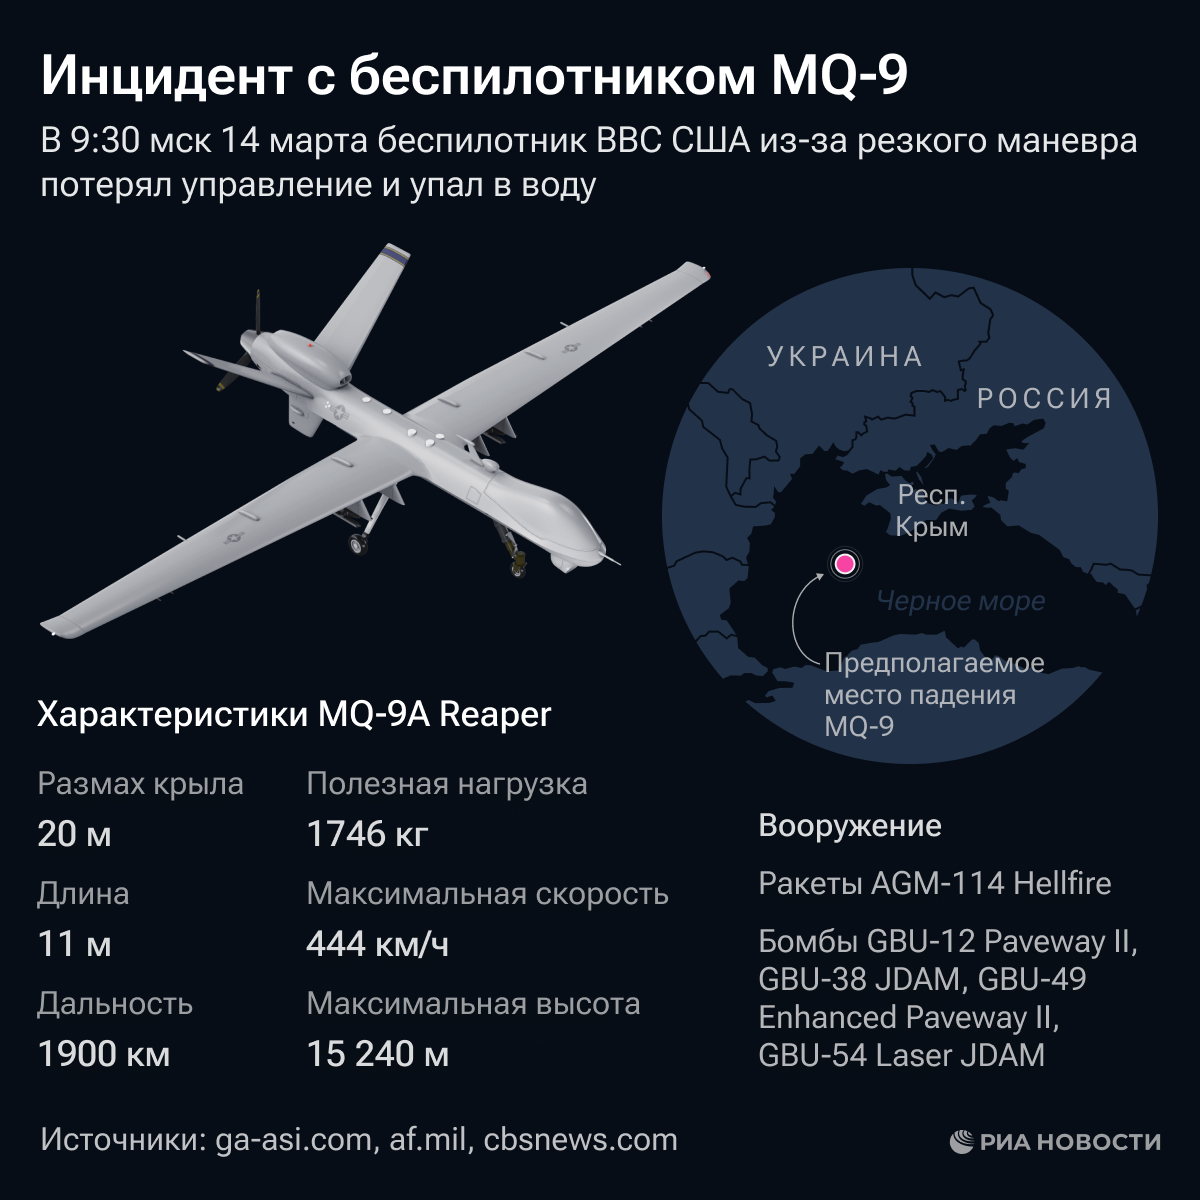 US MQ-9 drone incident